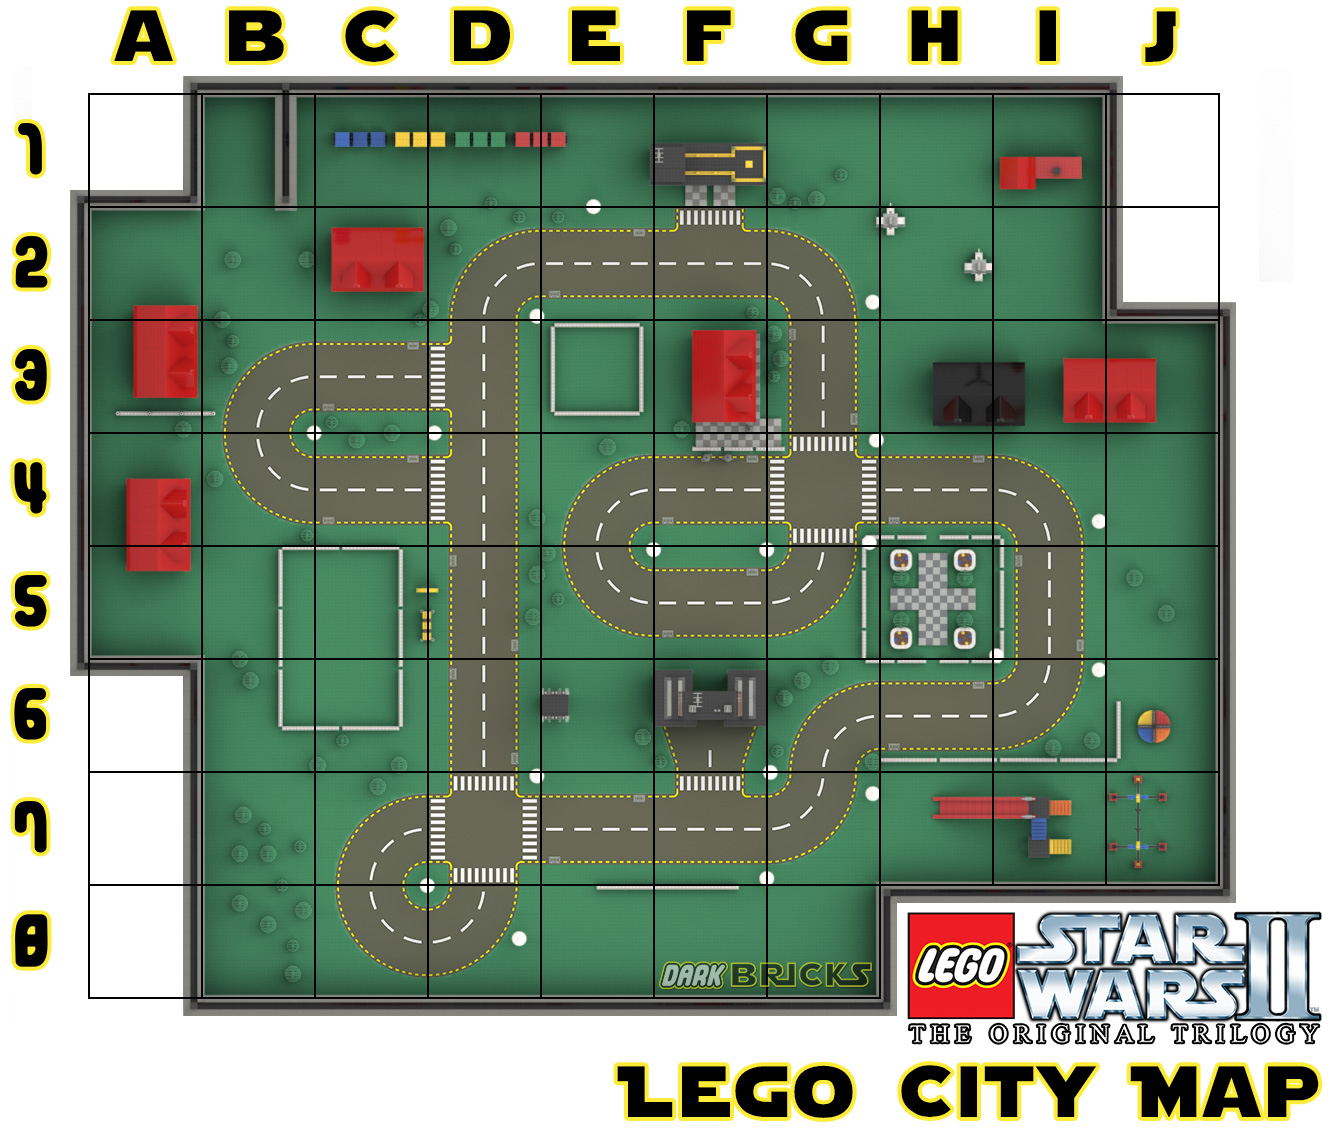 darkBricks - LEGO Wars - - The Original Trilogy - Walkthrough - LEGO City